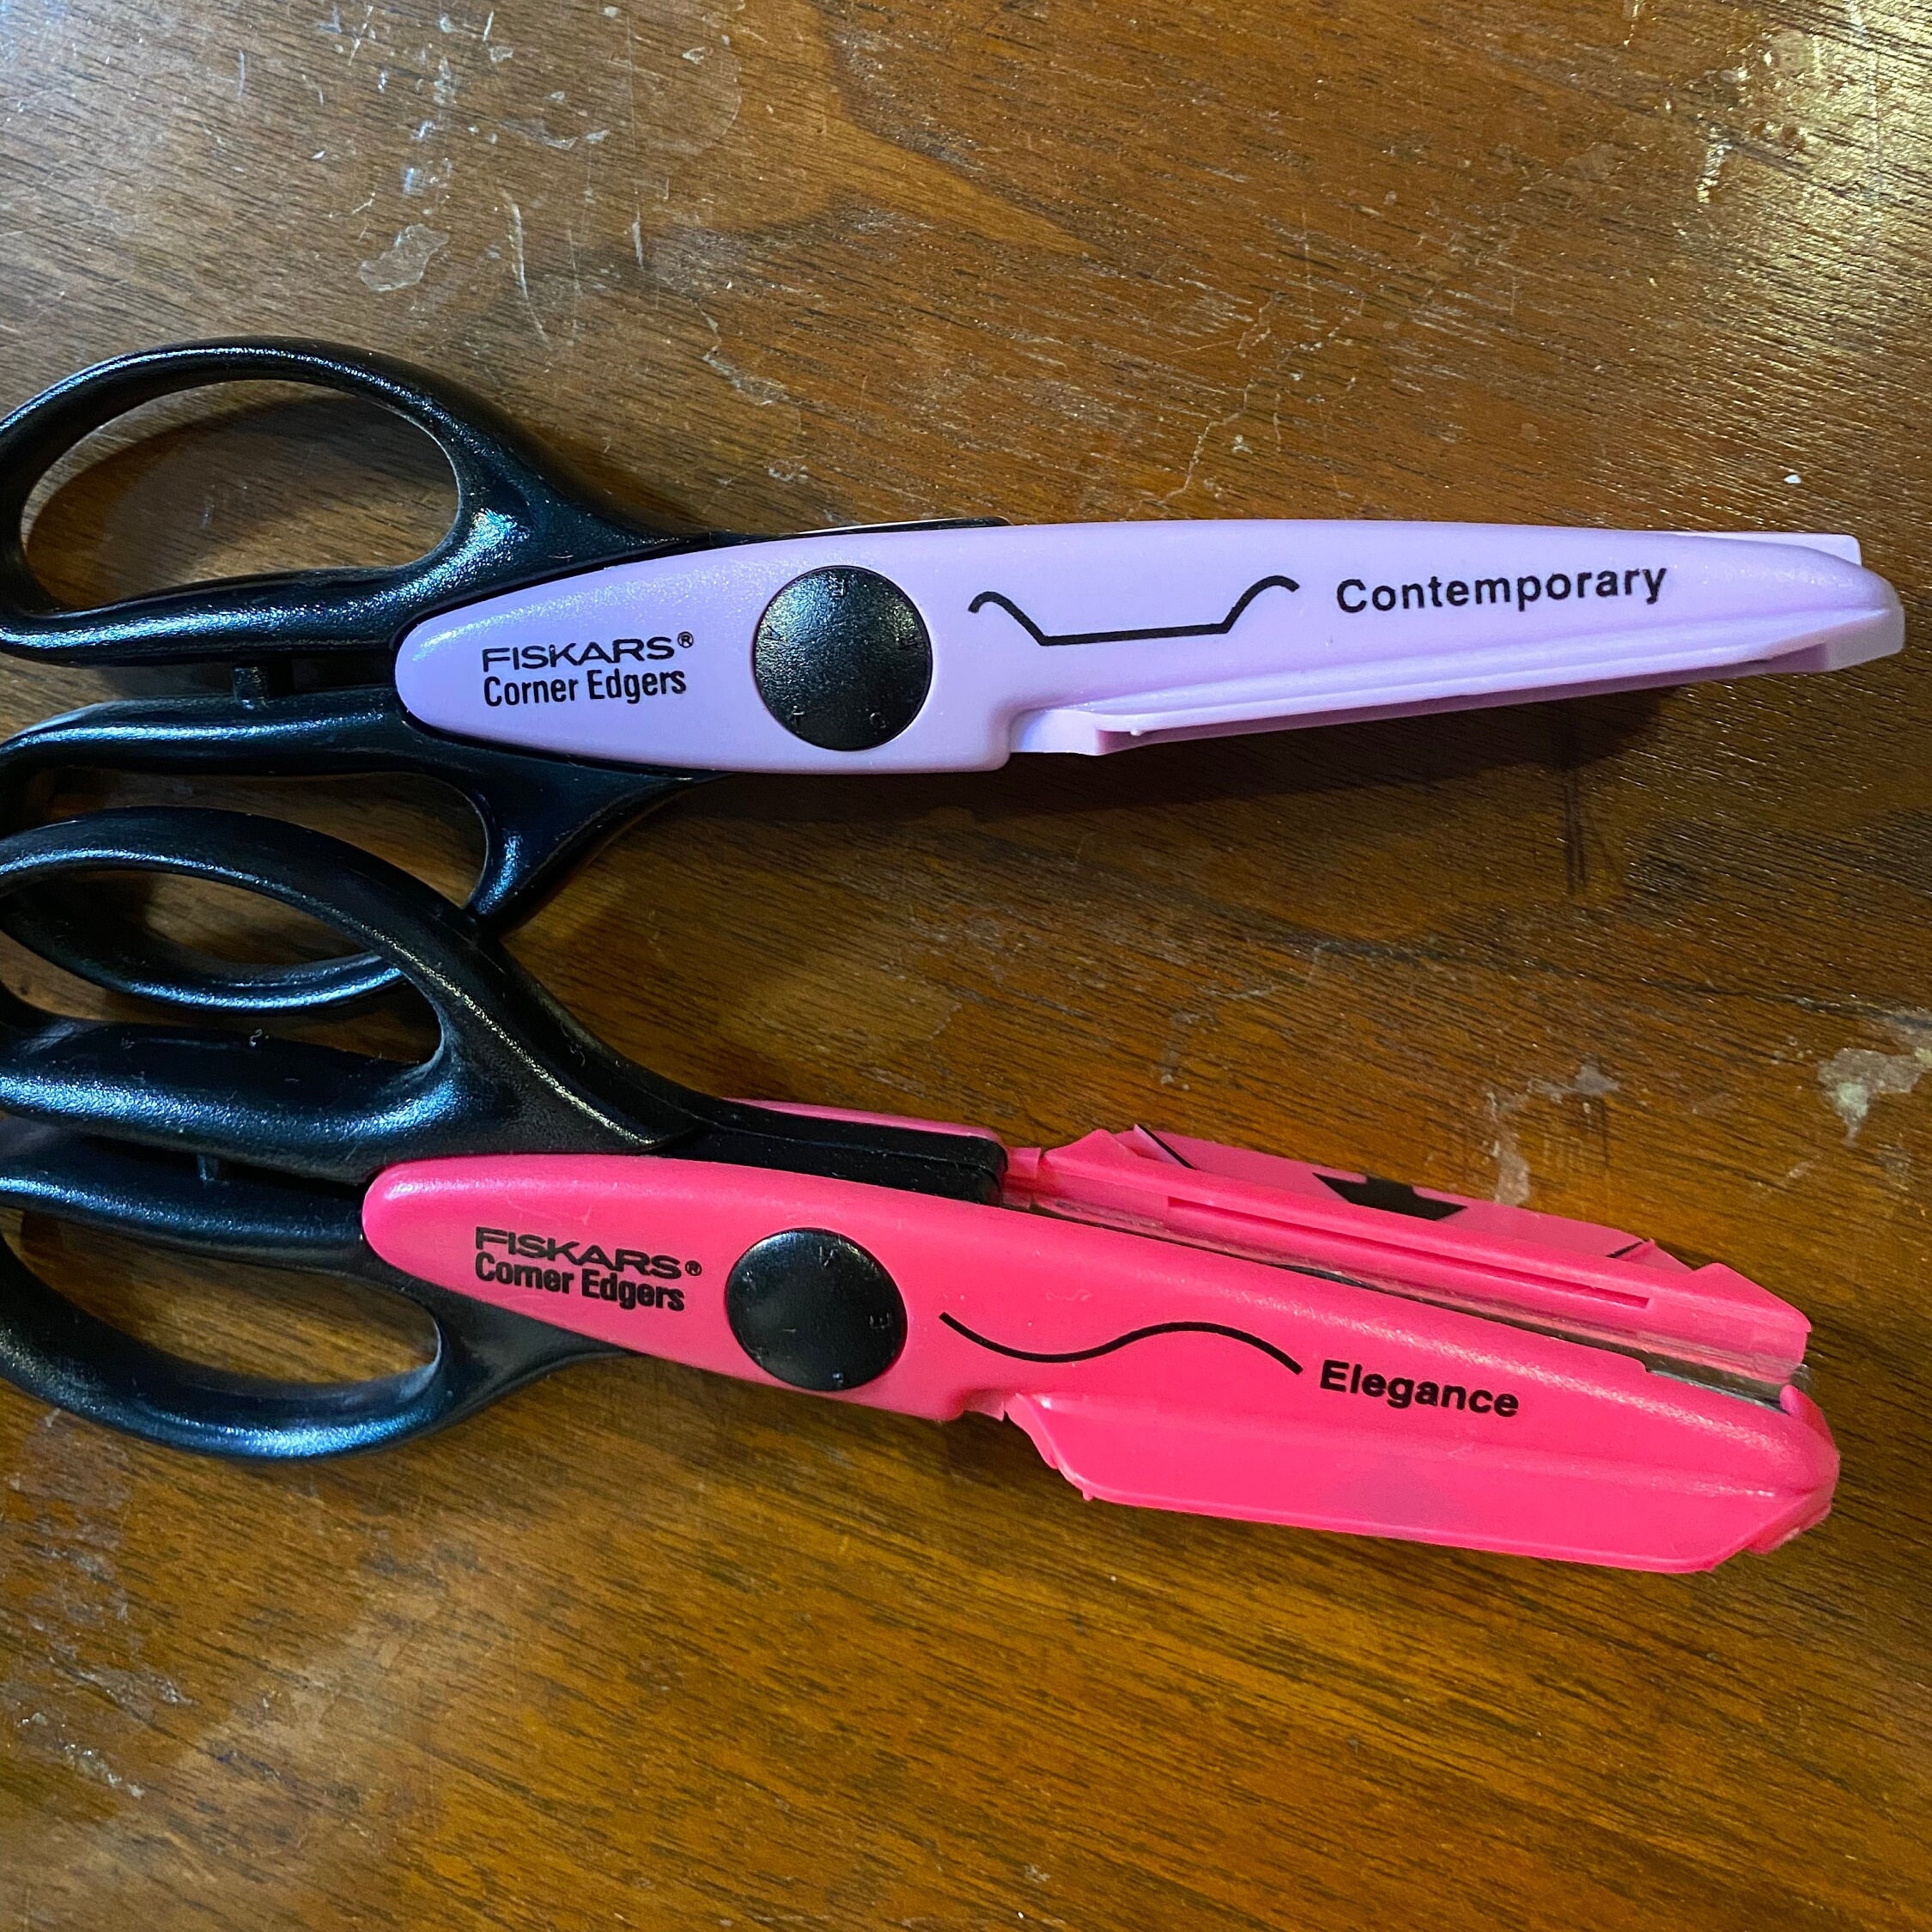 Fiskars spring-action scissors - {creative chick}